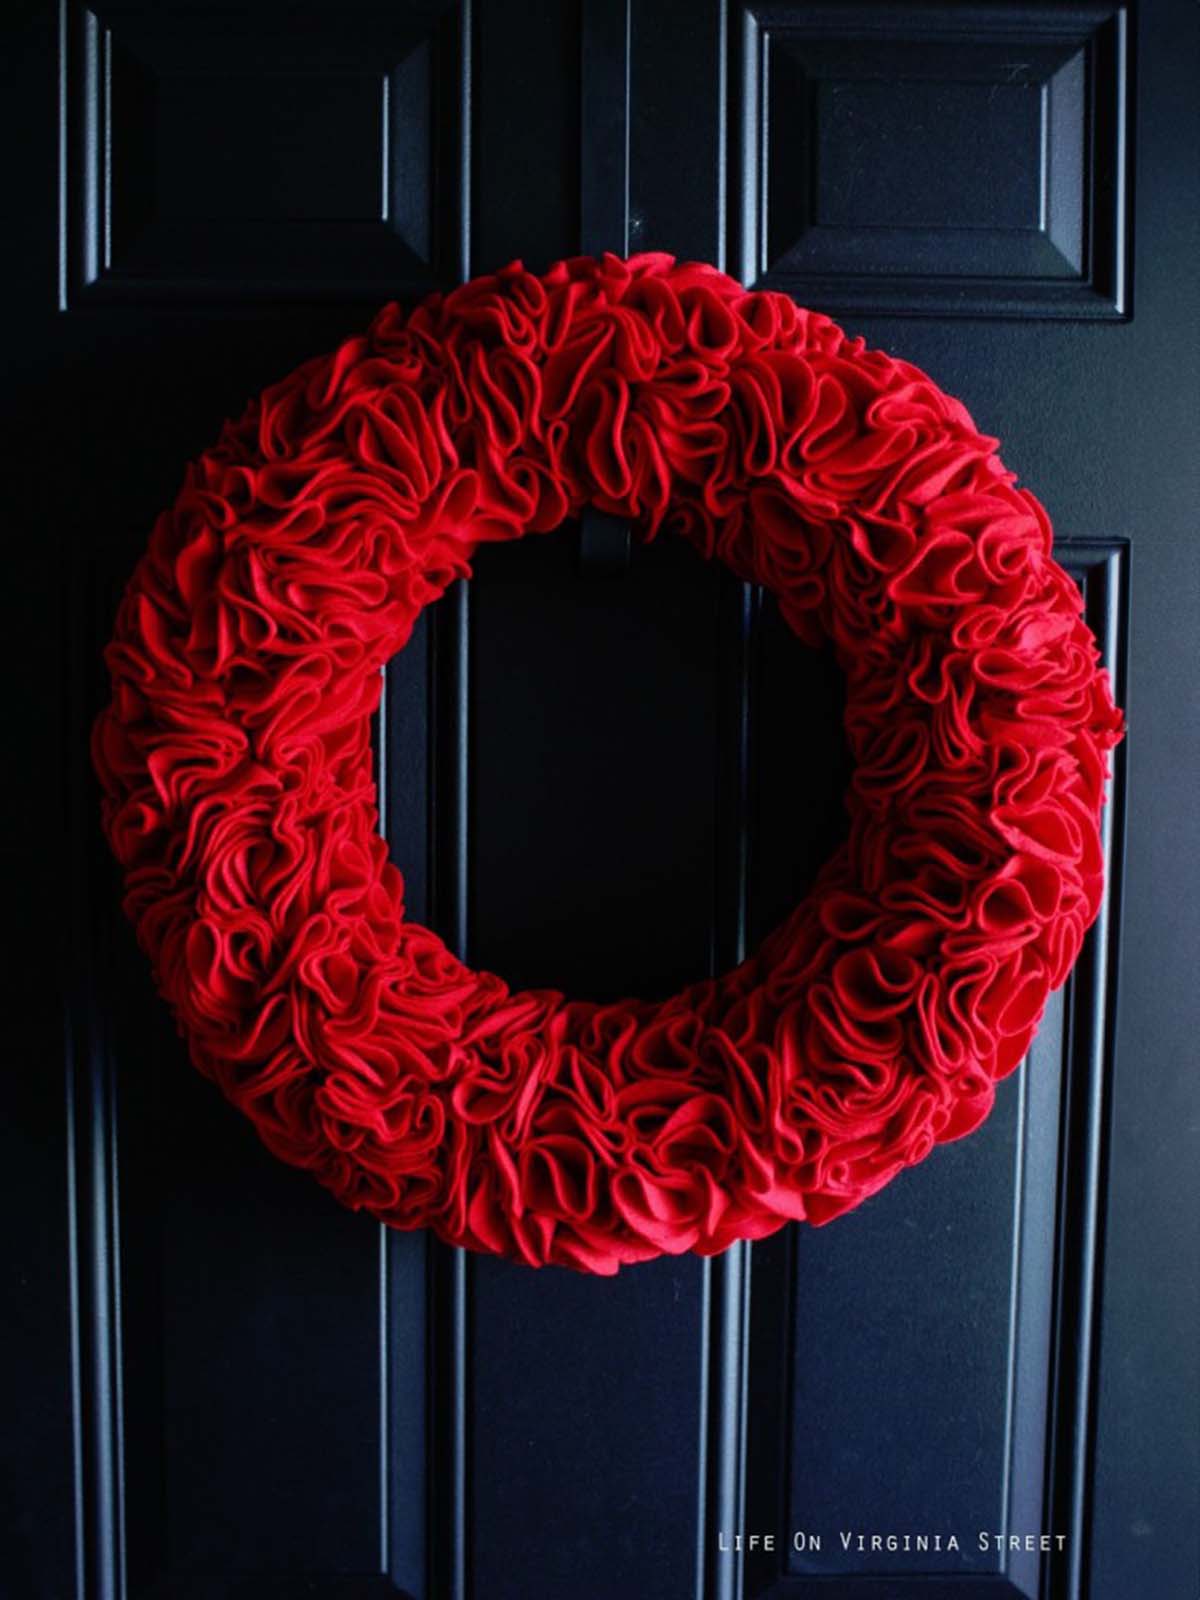 Round red DIY felt ruffle wreath on a dark navy blue door for Valentine's Day or Christmas.